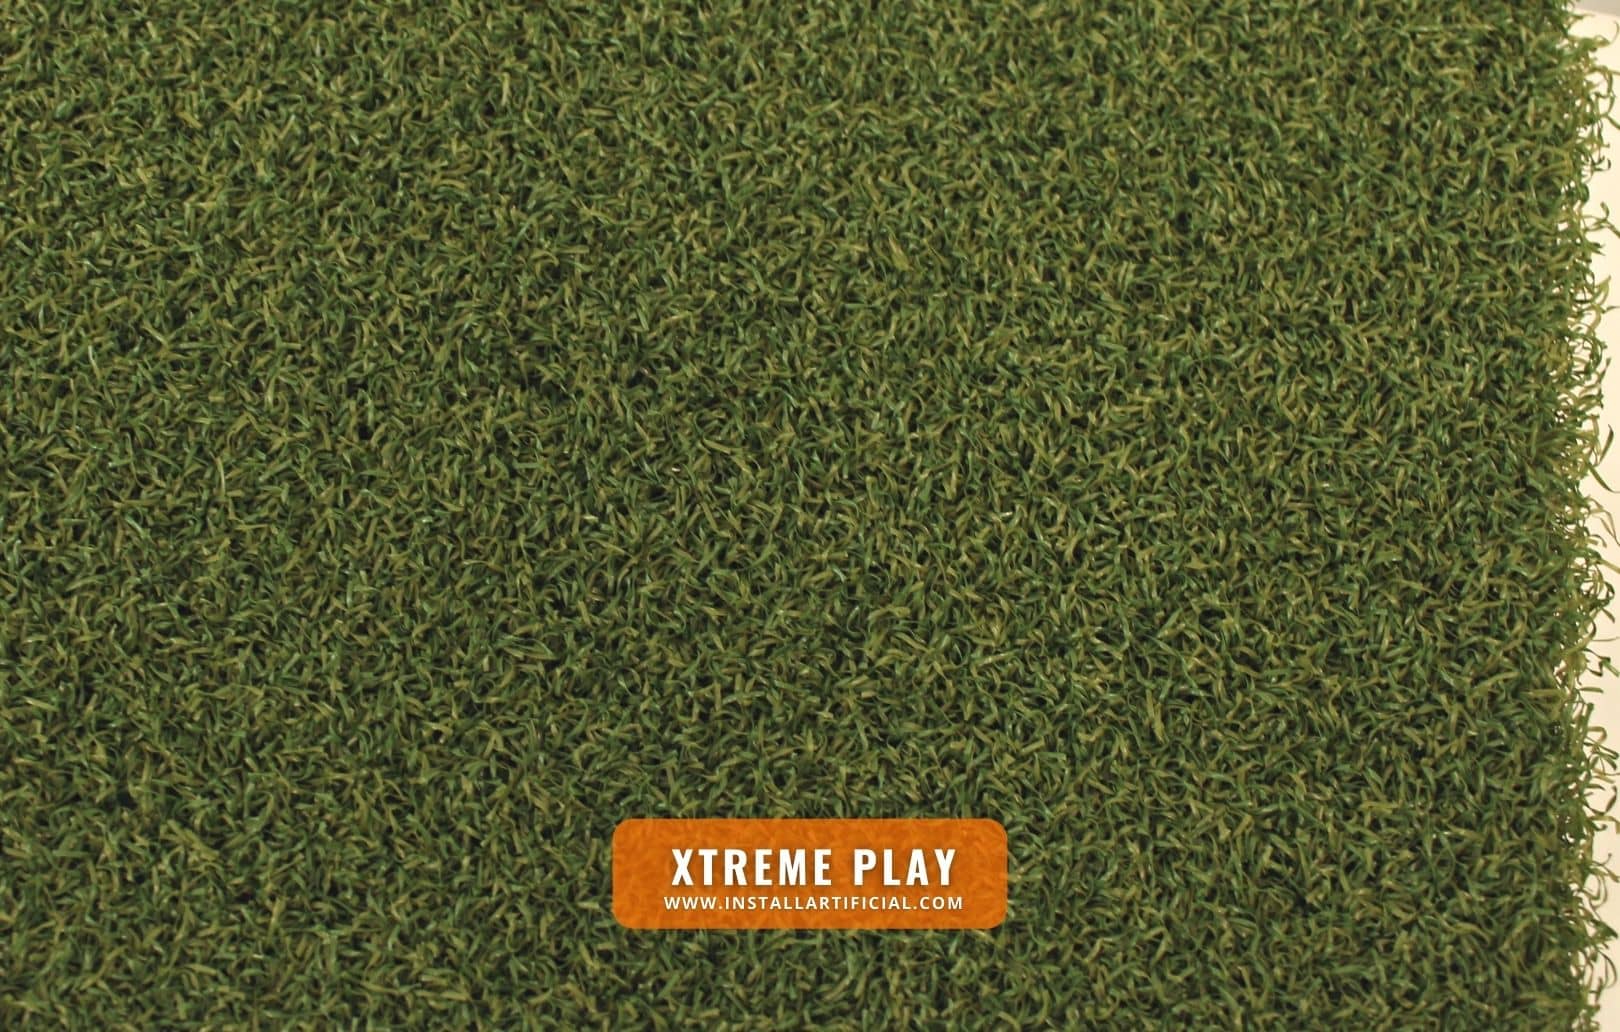 Xtreme Play, Smart Turf, top